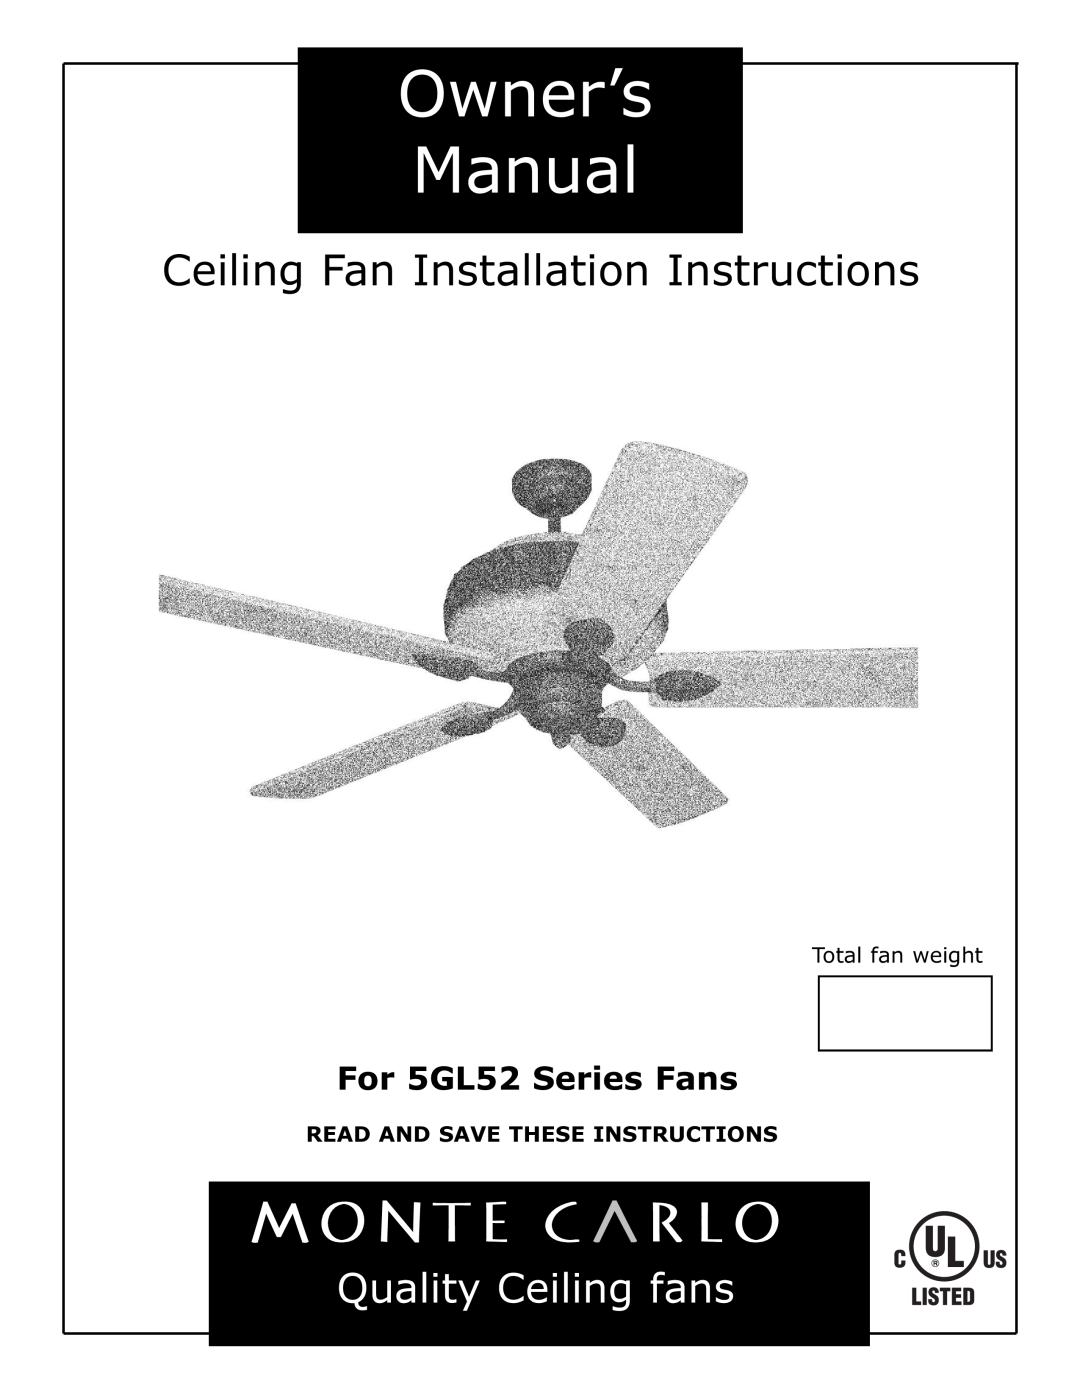 Monte Carlo Fan Company 5GL52 owner manual Ceiling Fan Installation Instructions, Quality Ceiling fans, Total fan weight 